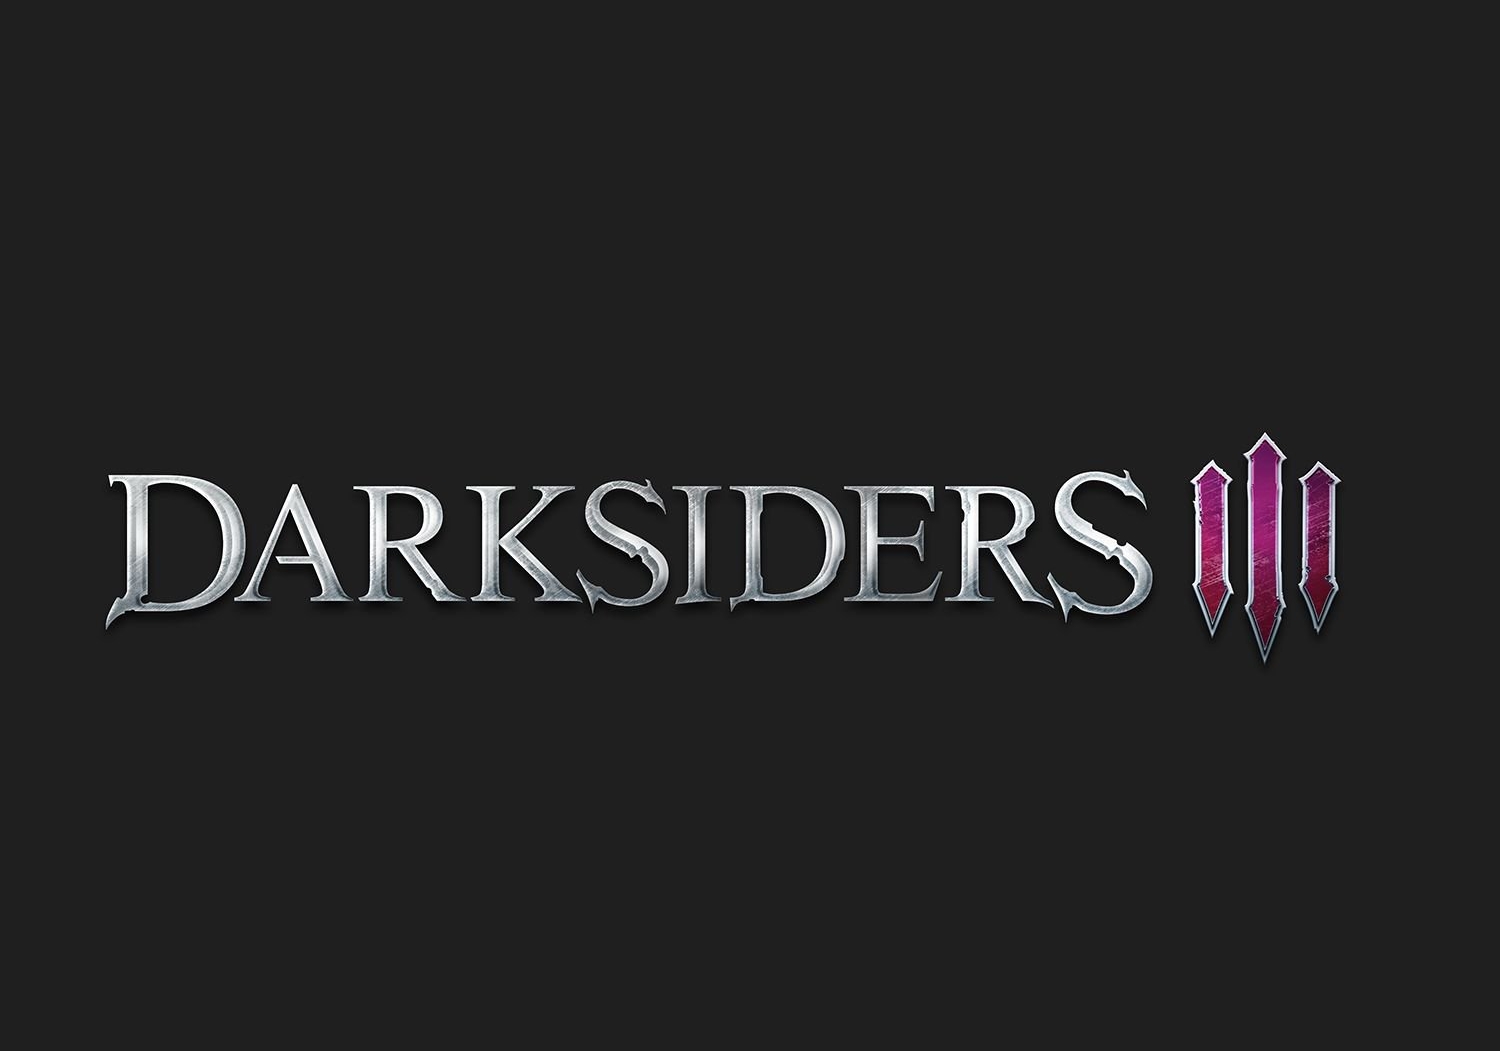 [Leak] First Darksiders III info and screenshots